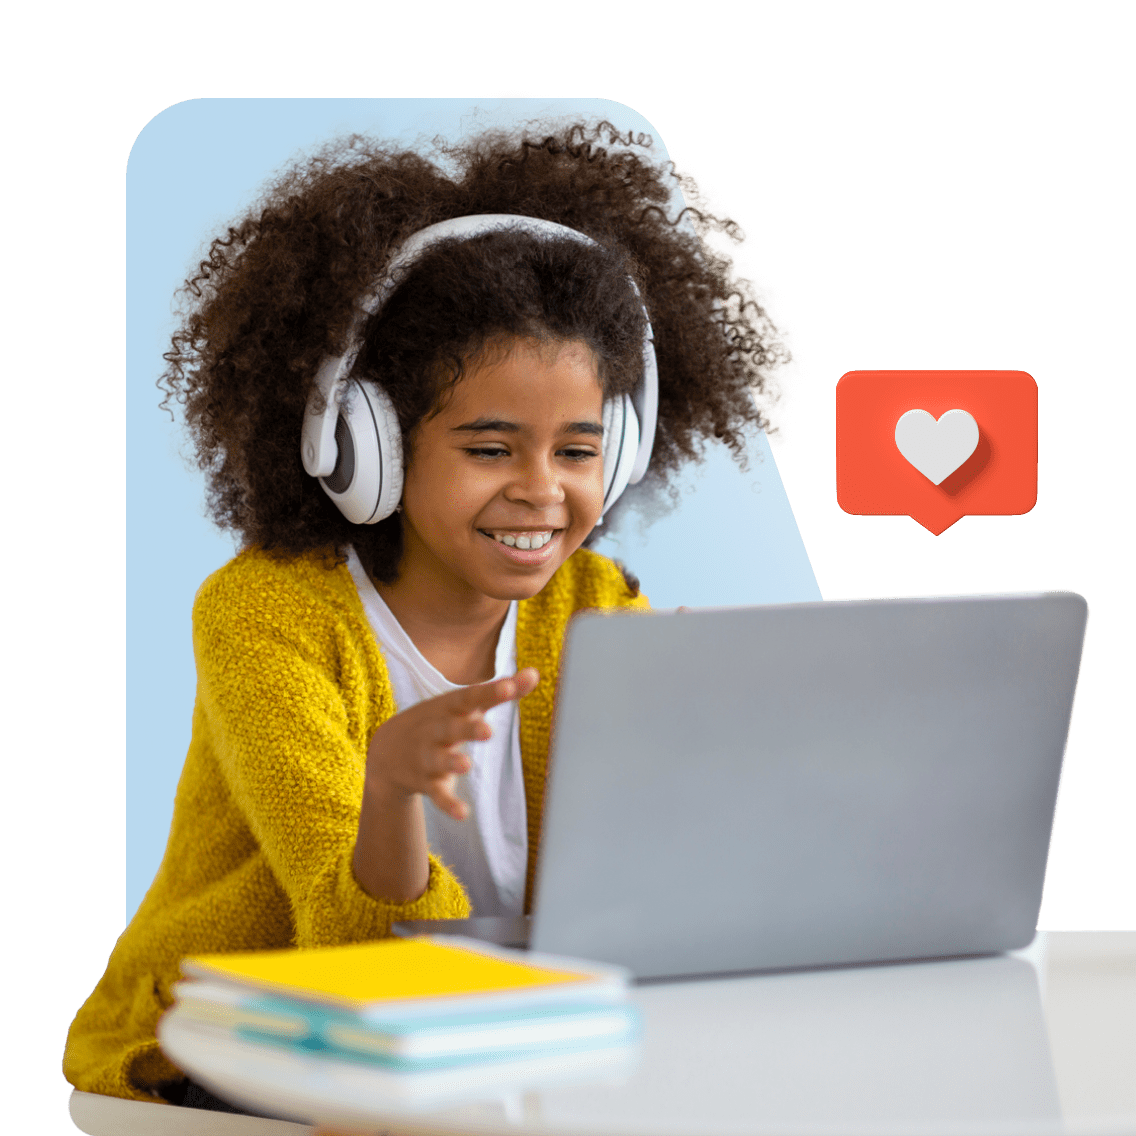 Homeschool Curriculum image 1 (name 1 Young Girl Laptop Headphones Heart)